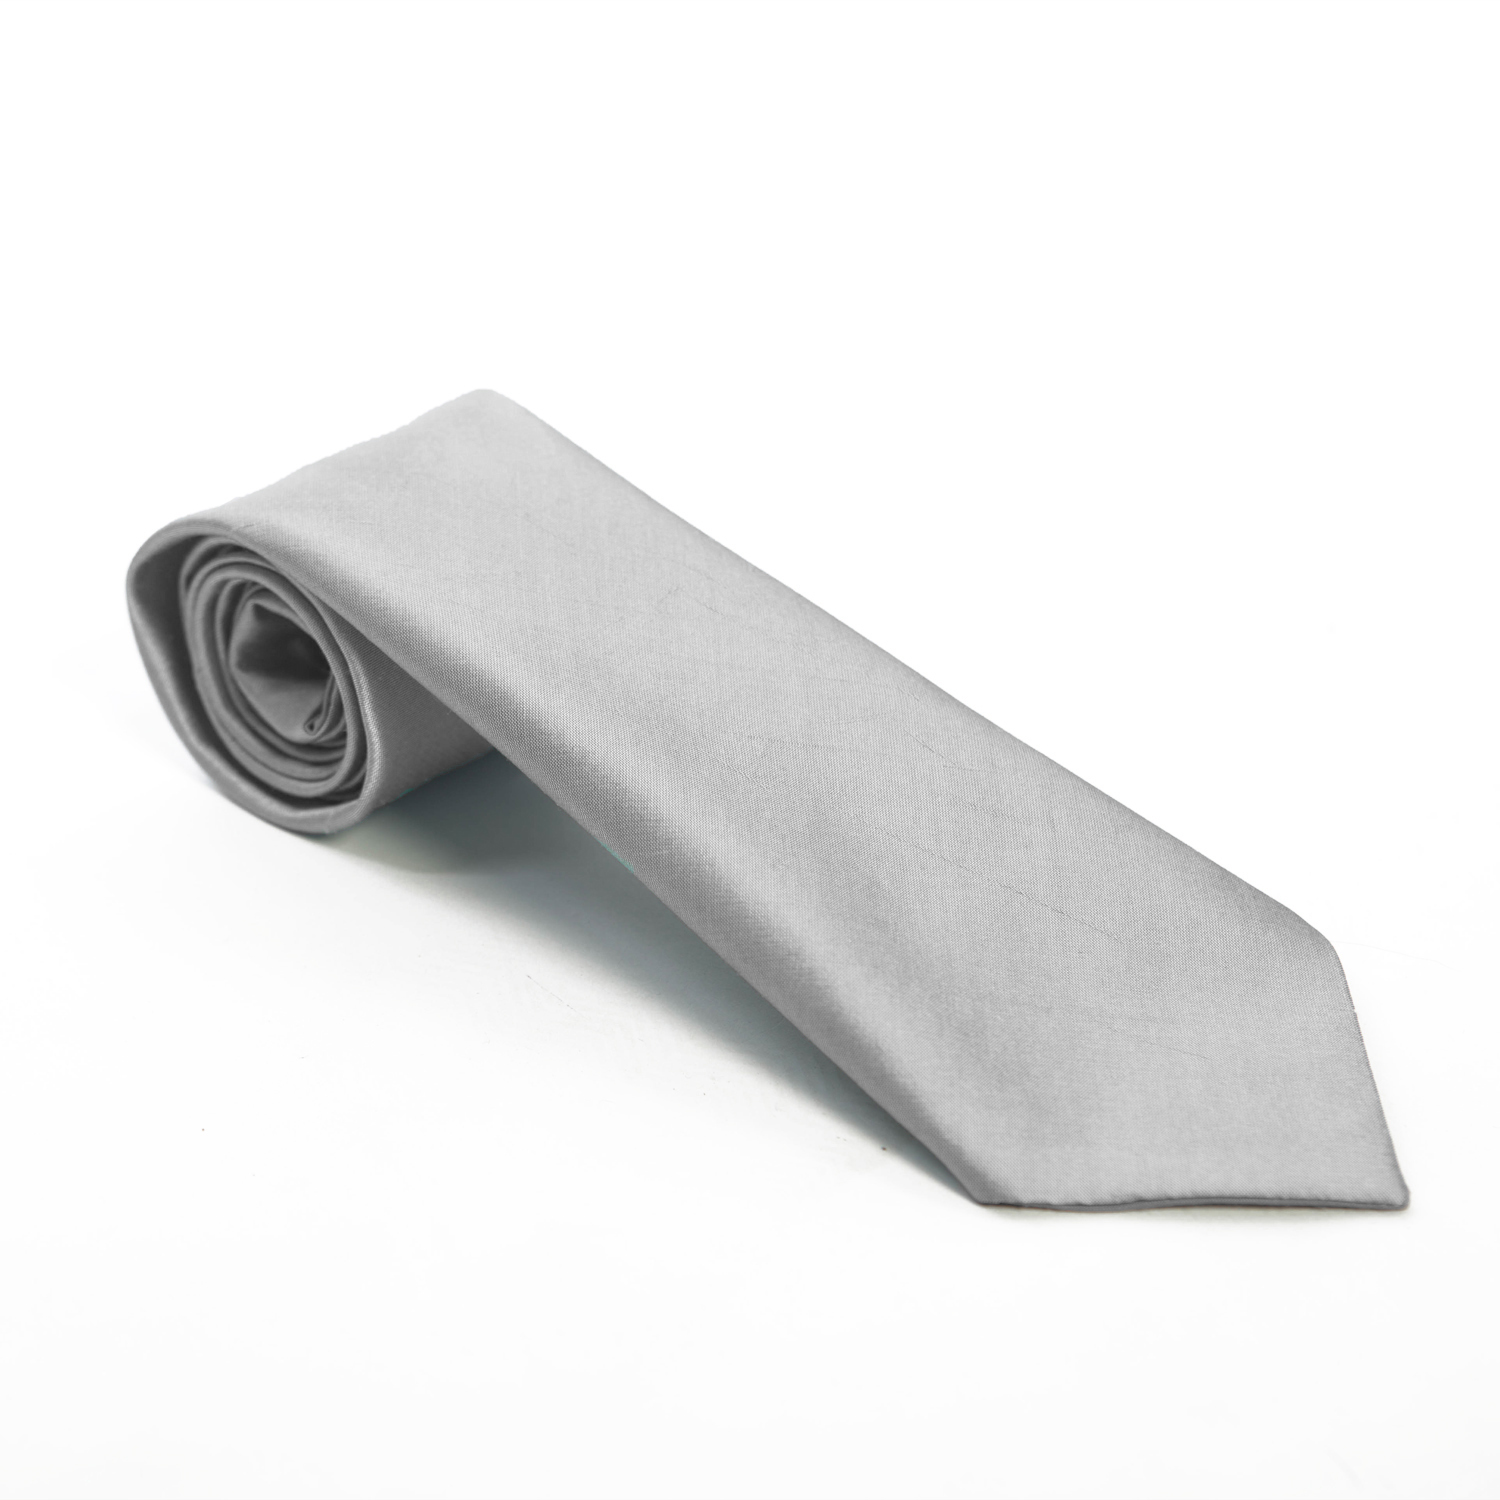 A pale grey men's silk tie - The Little Wedding Company